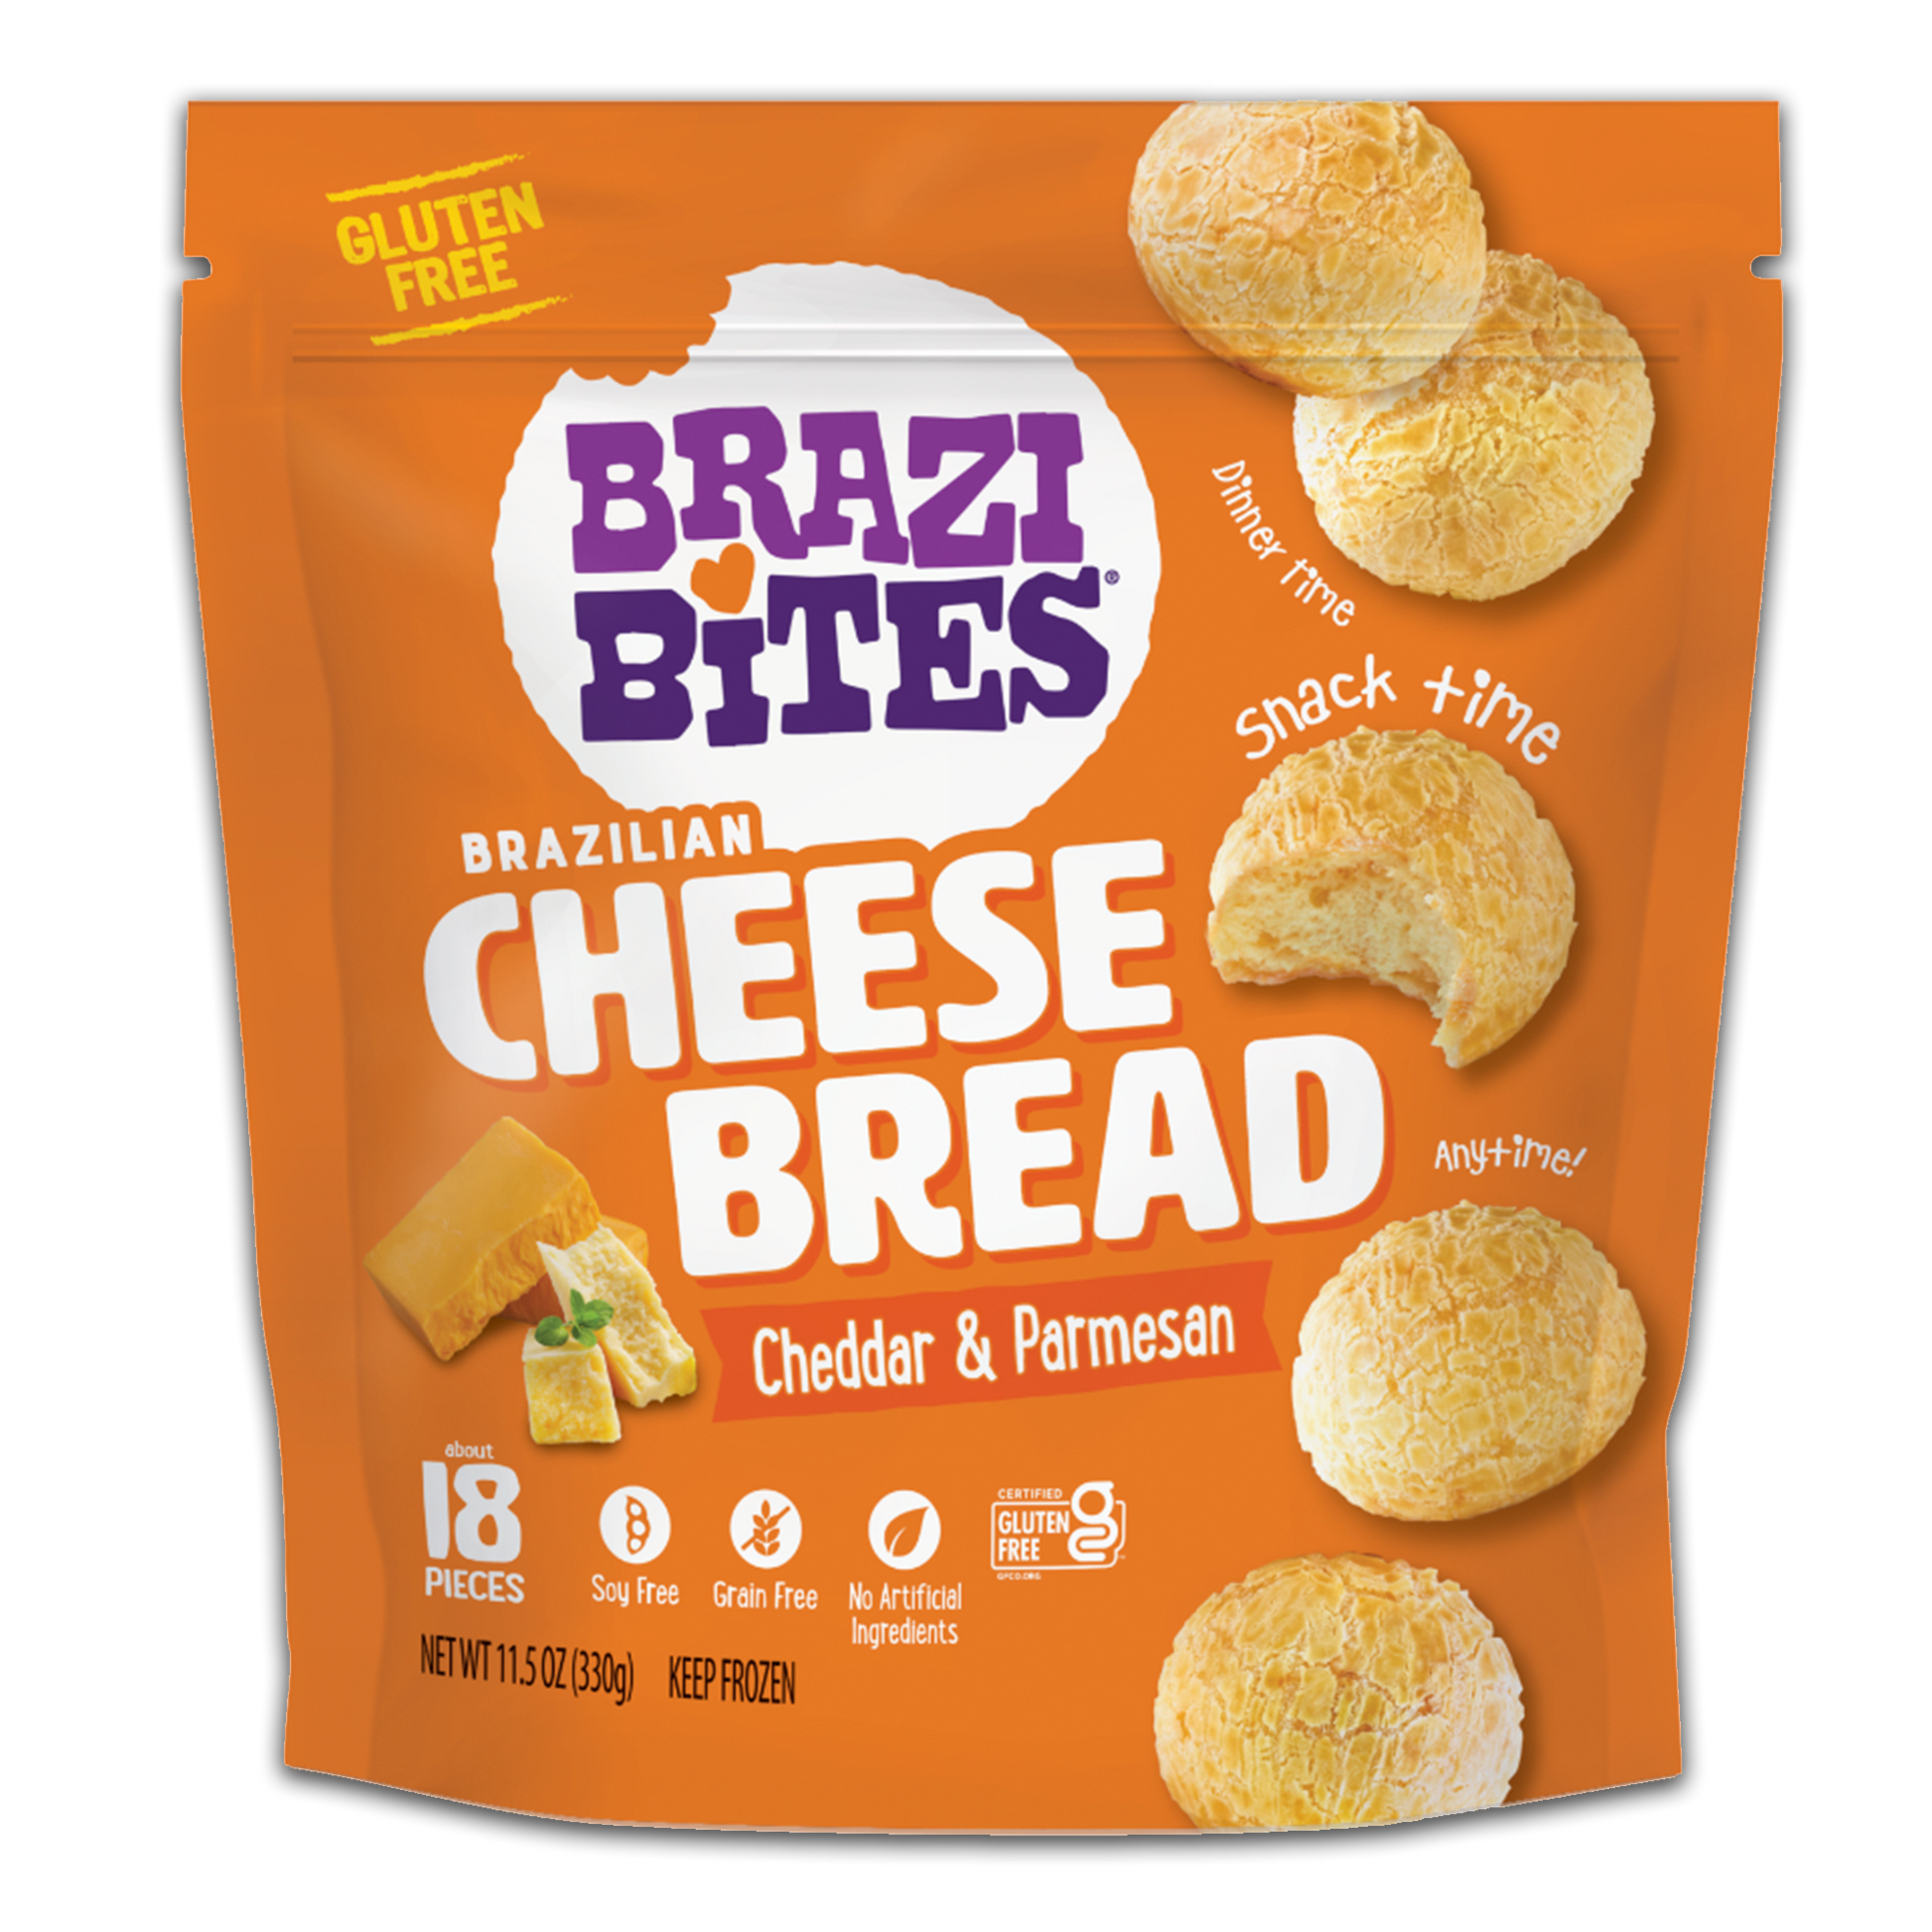 Brazi Bites Cheddar & Parmesan Brazilian Cheese Bread Packaging